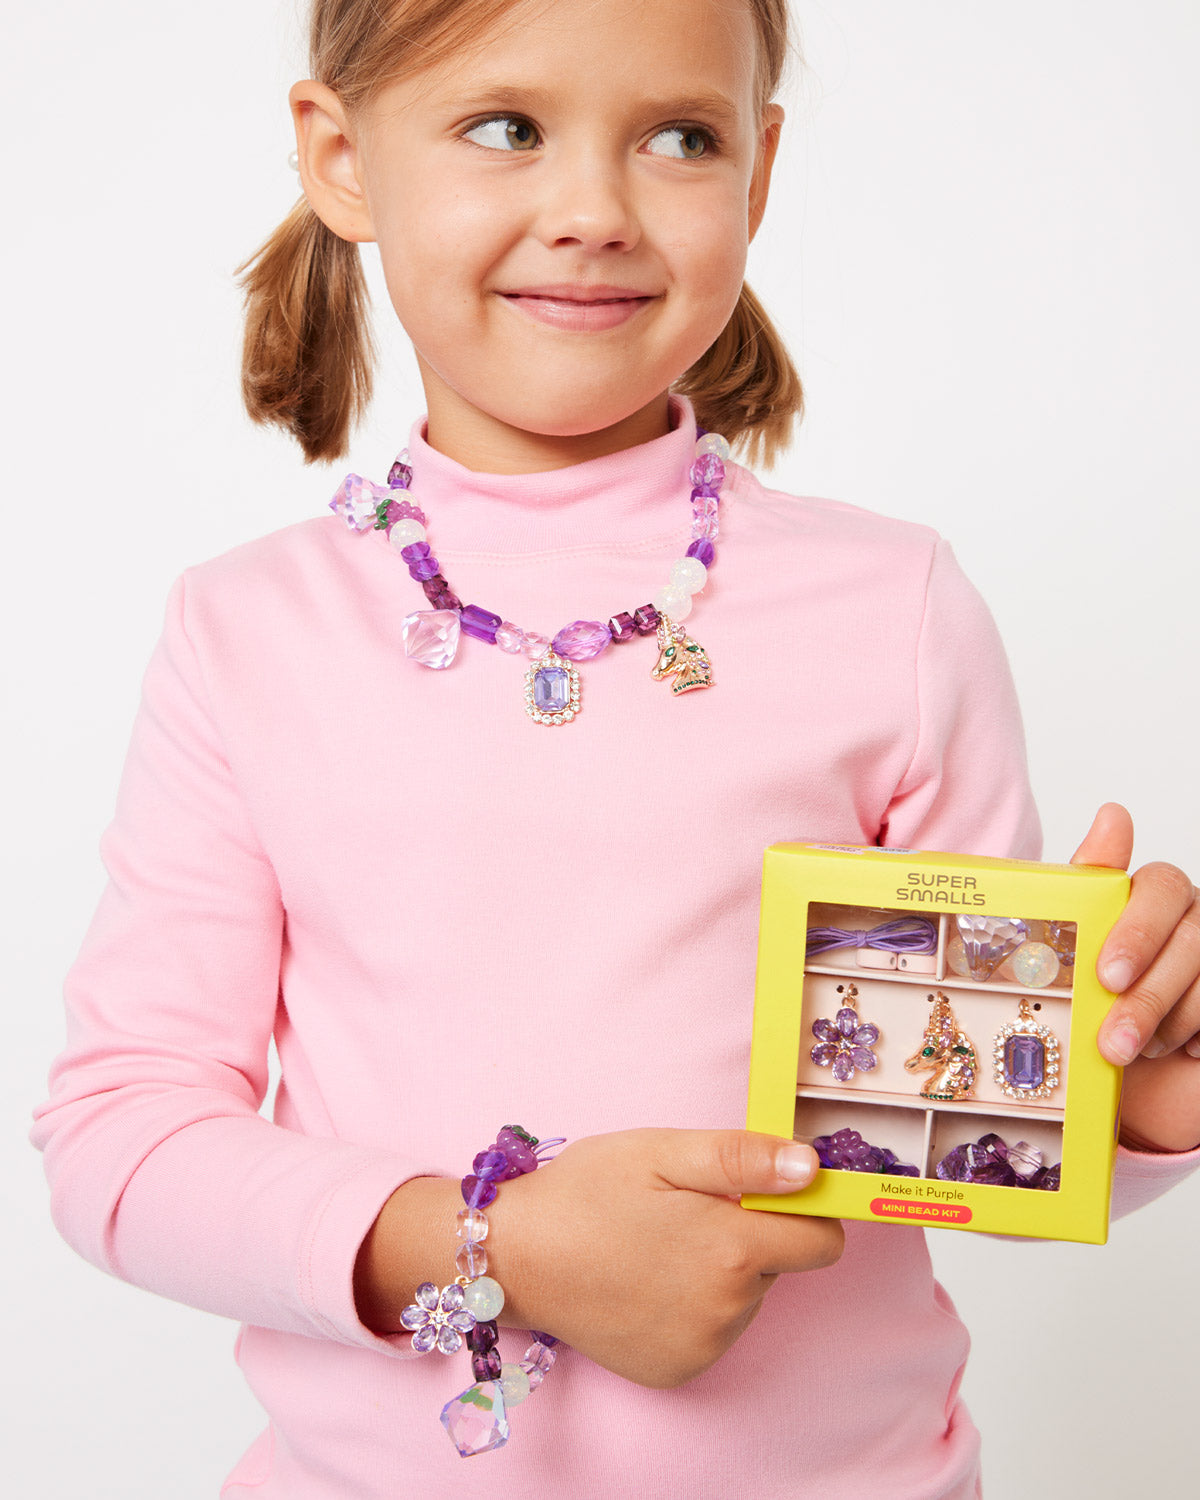 Make It Purple Mini Bead Kit | Ages 4+